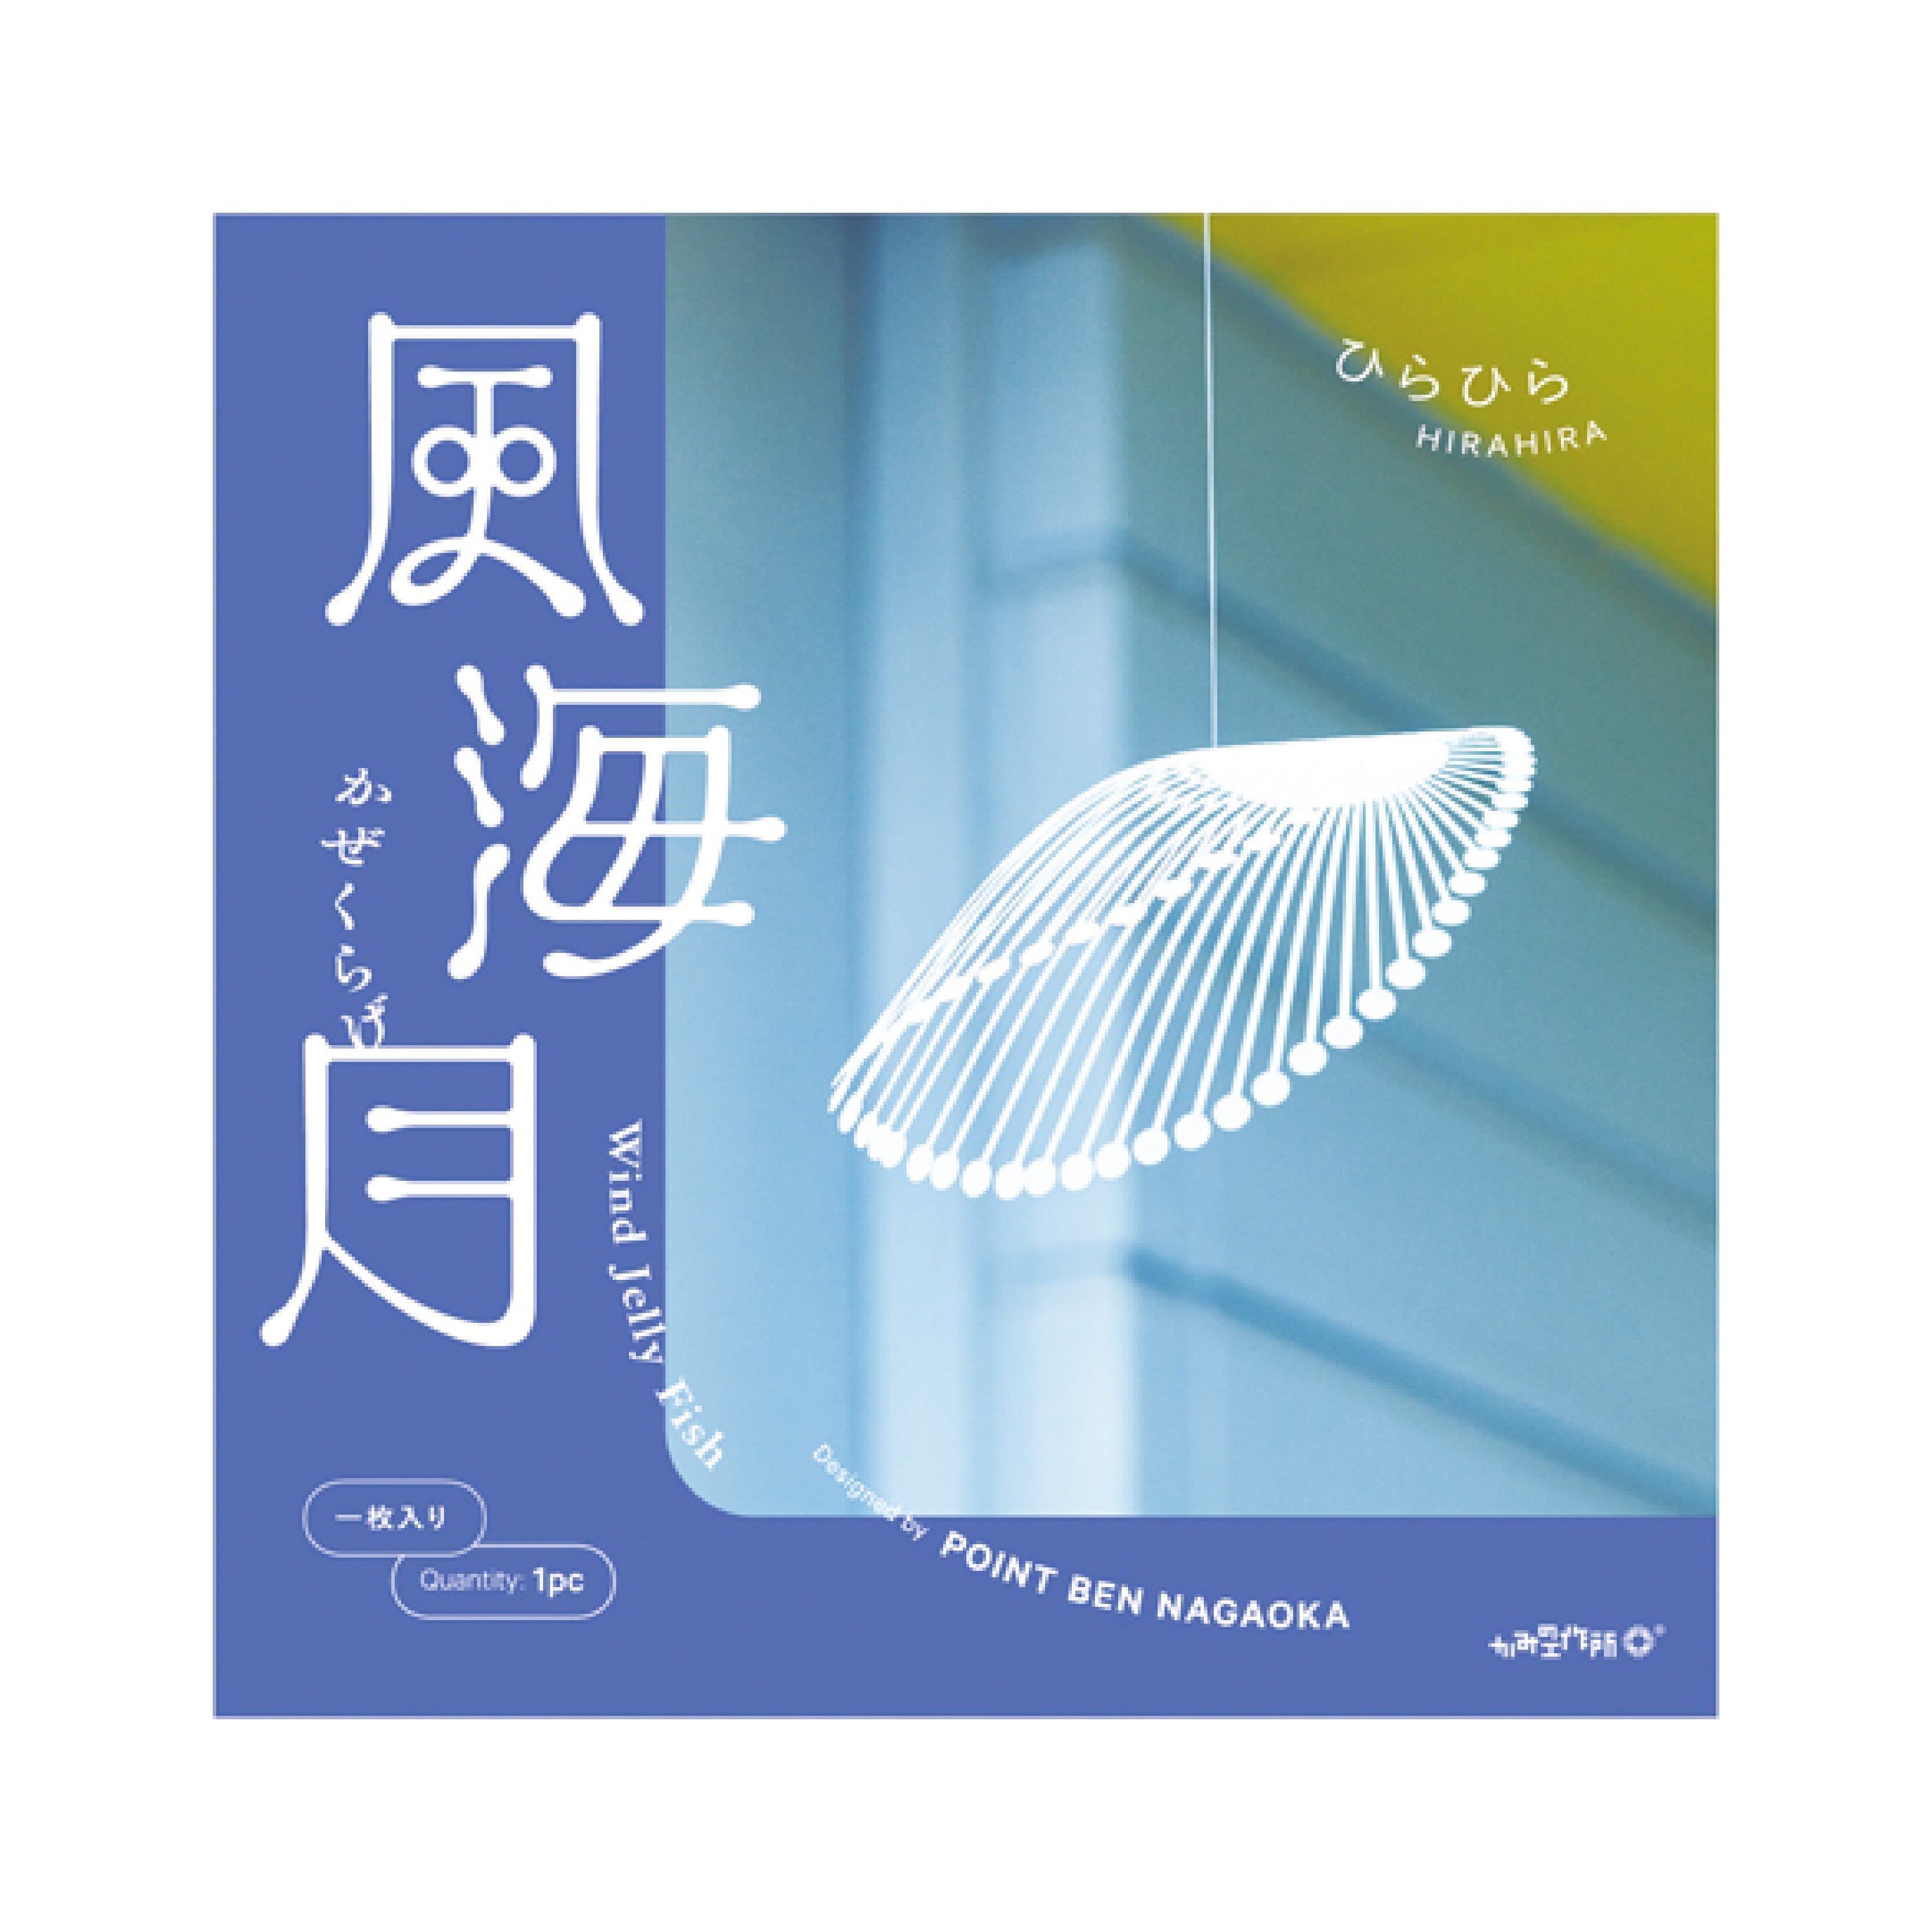 Wind Jelly Fish HIRAHIRA